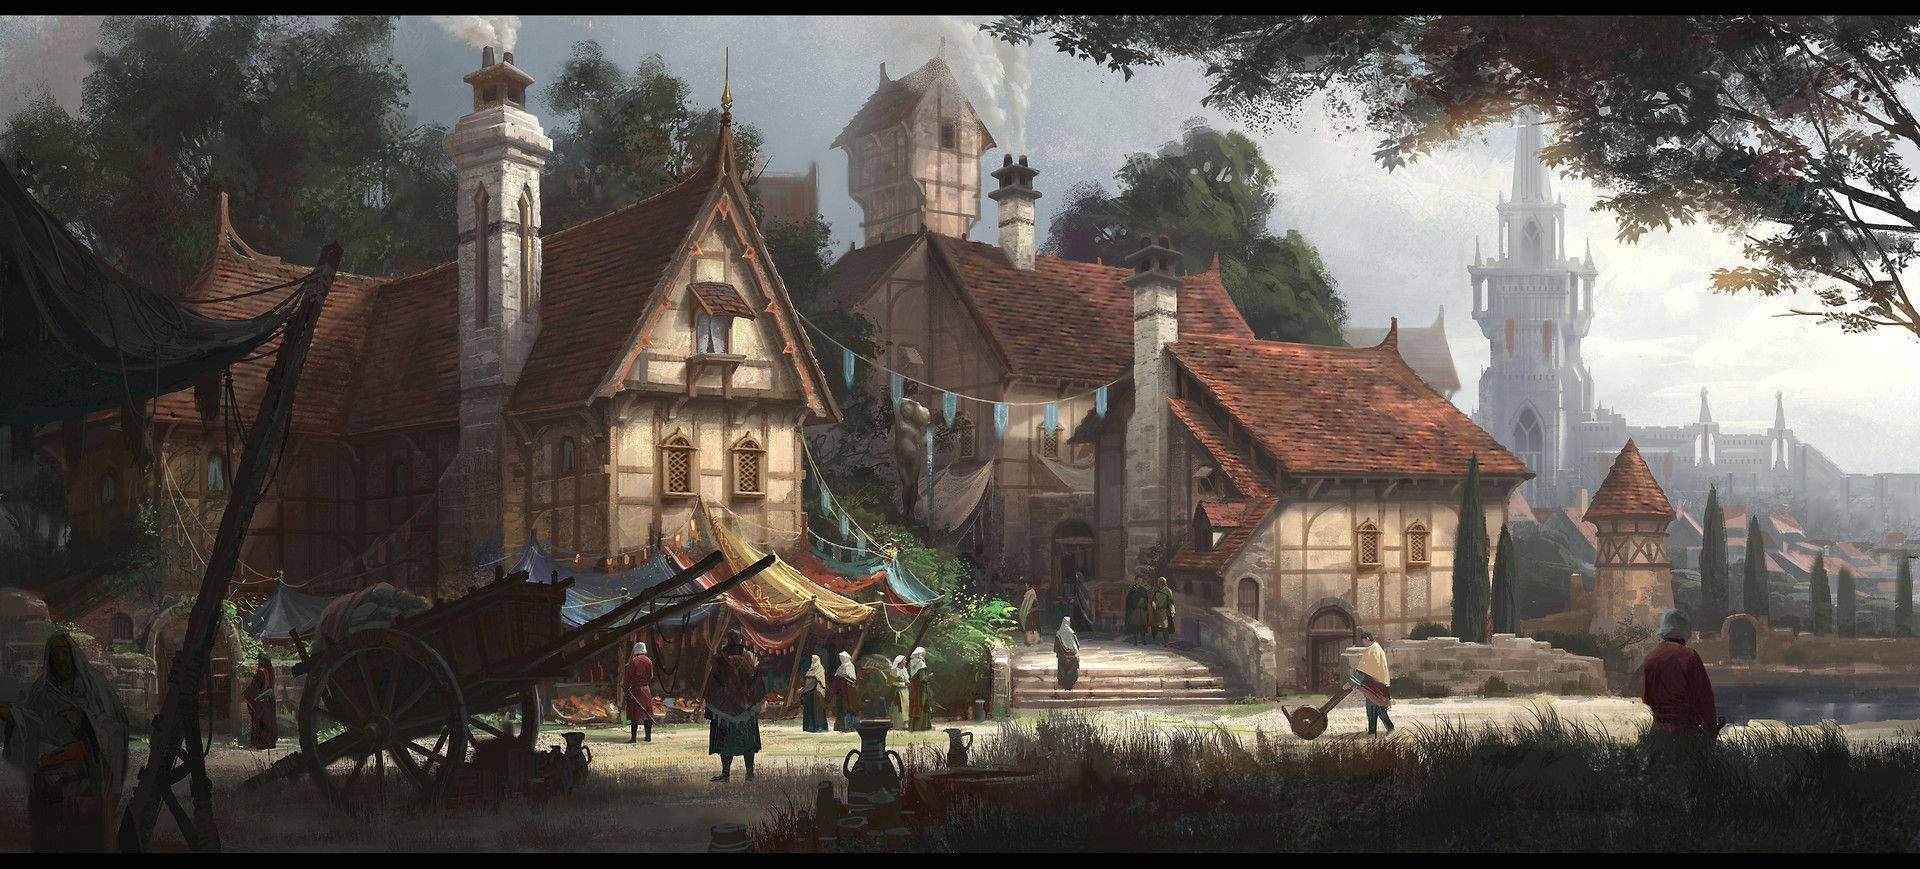 Medieval Fantasy Village Art Background